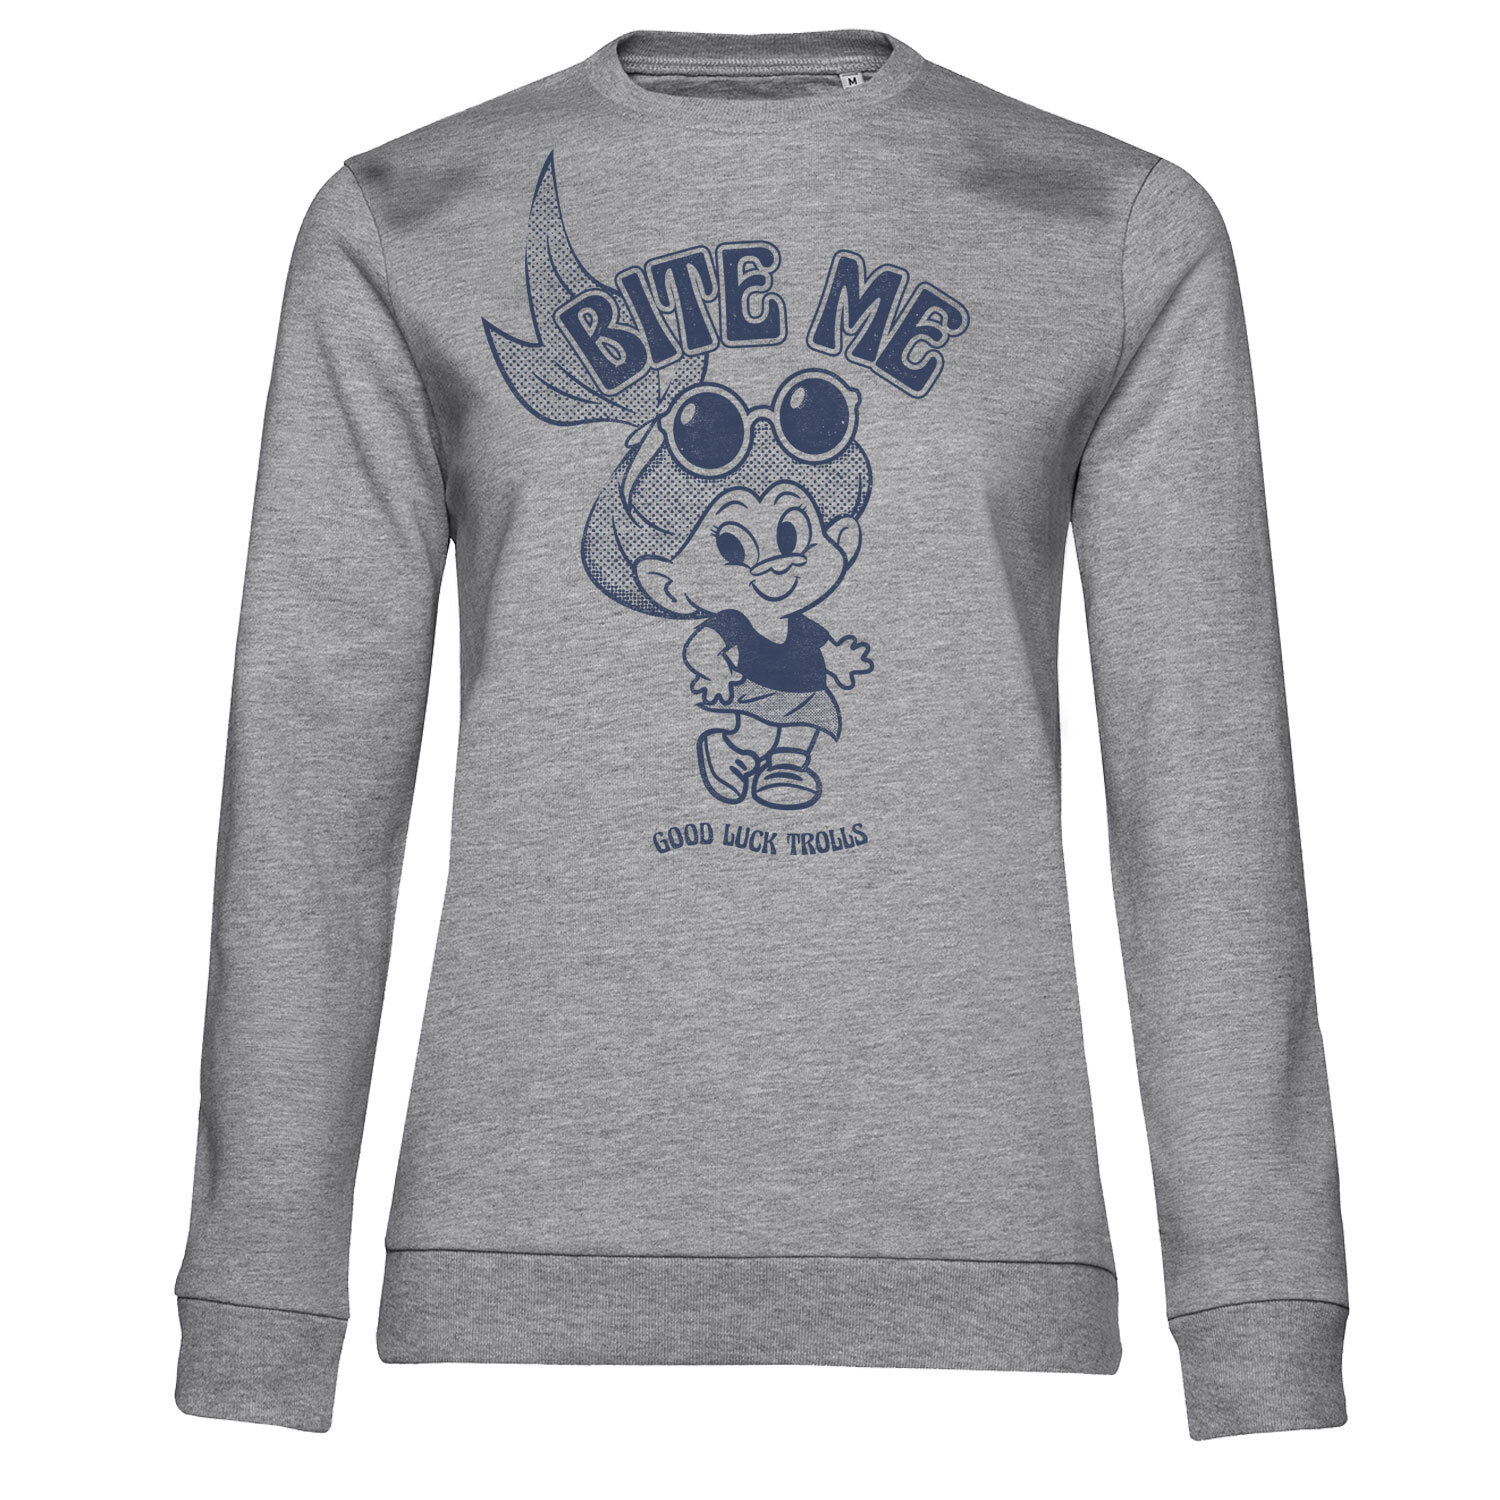 Good Luck Trolls - Bite Me Sweatshirt